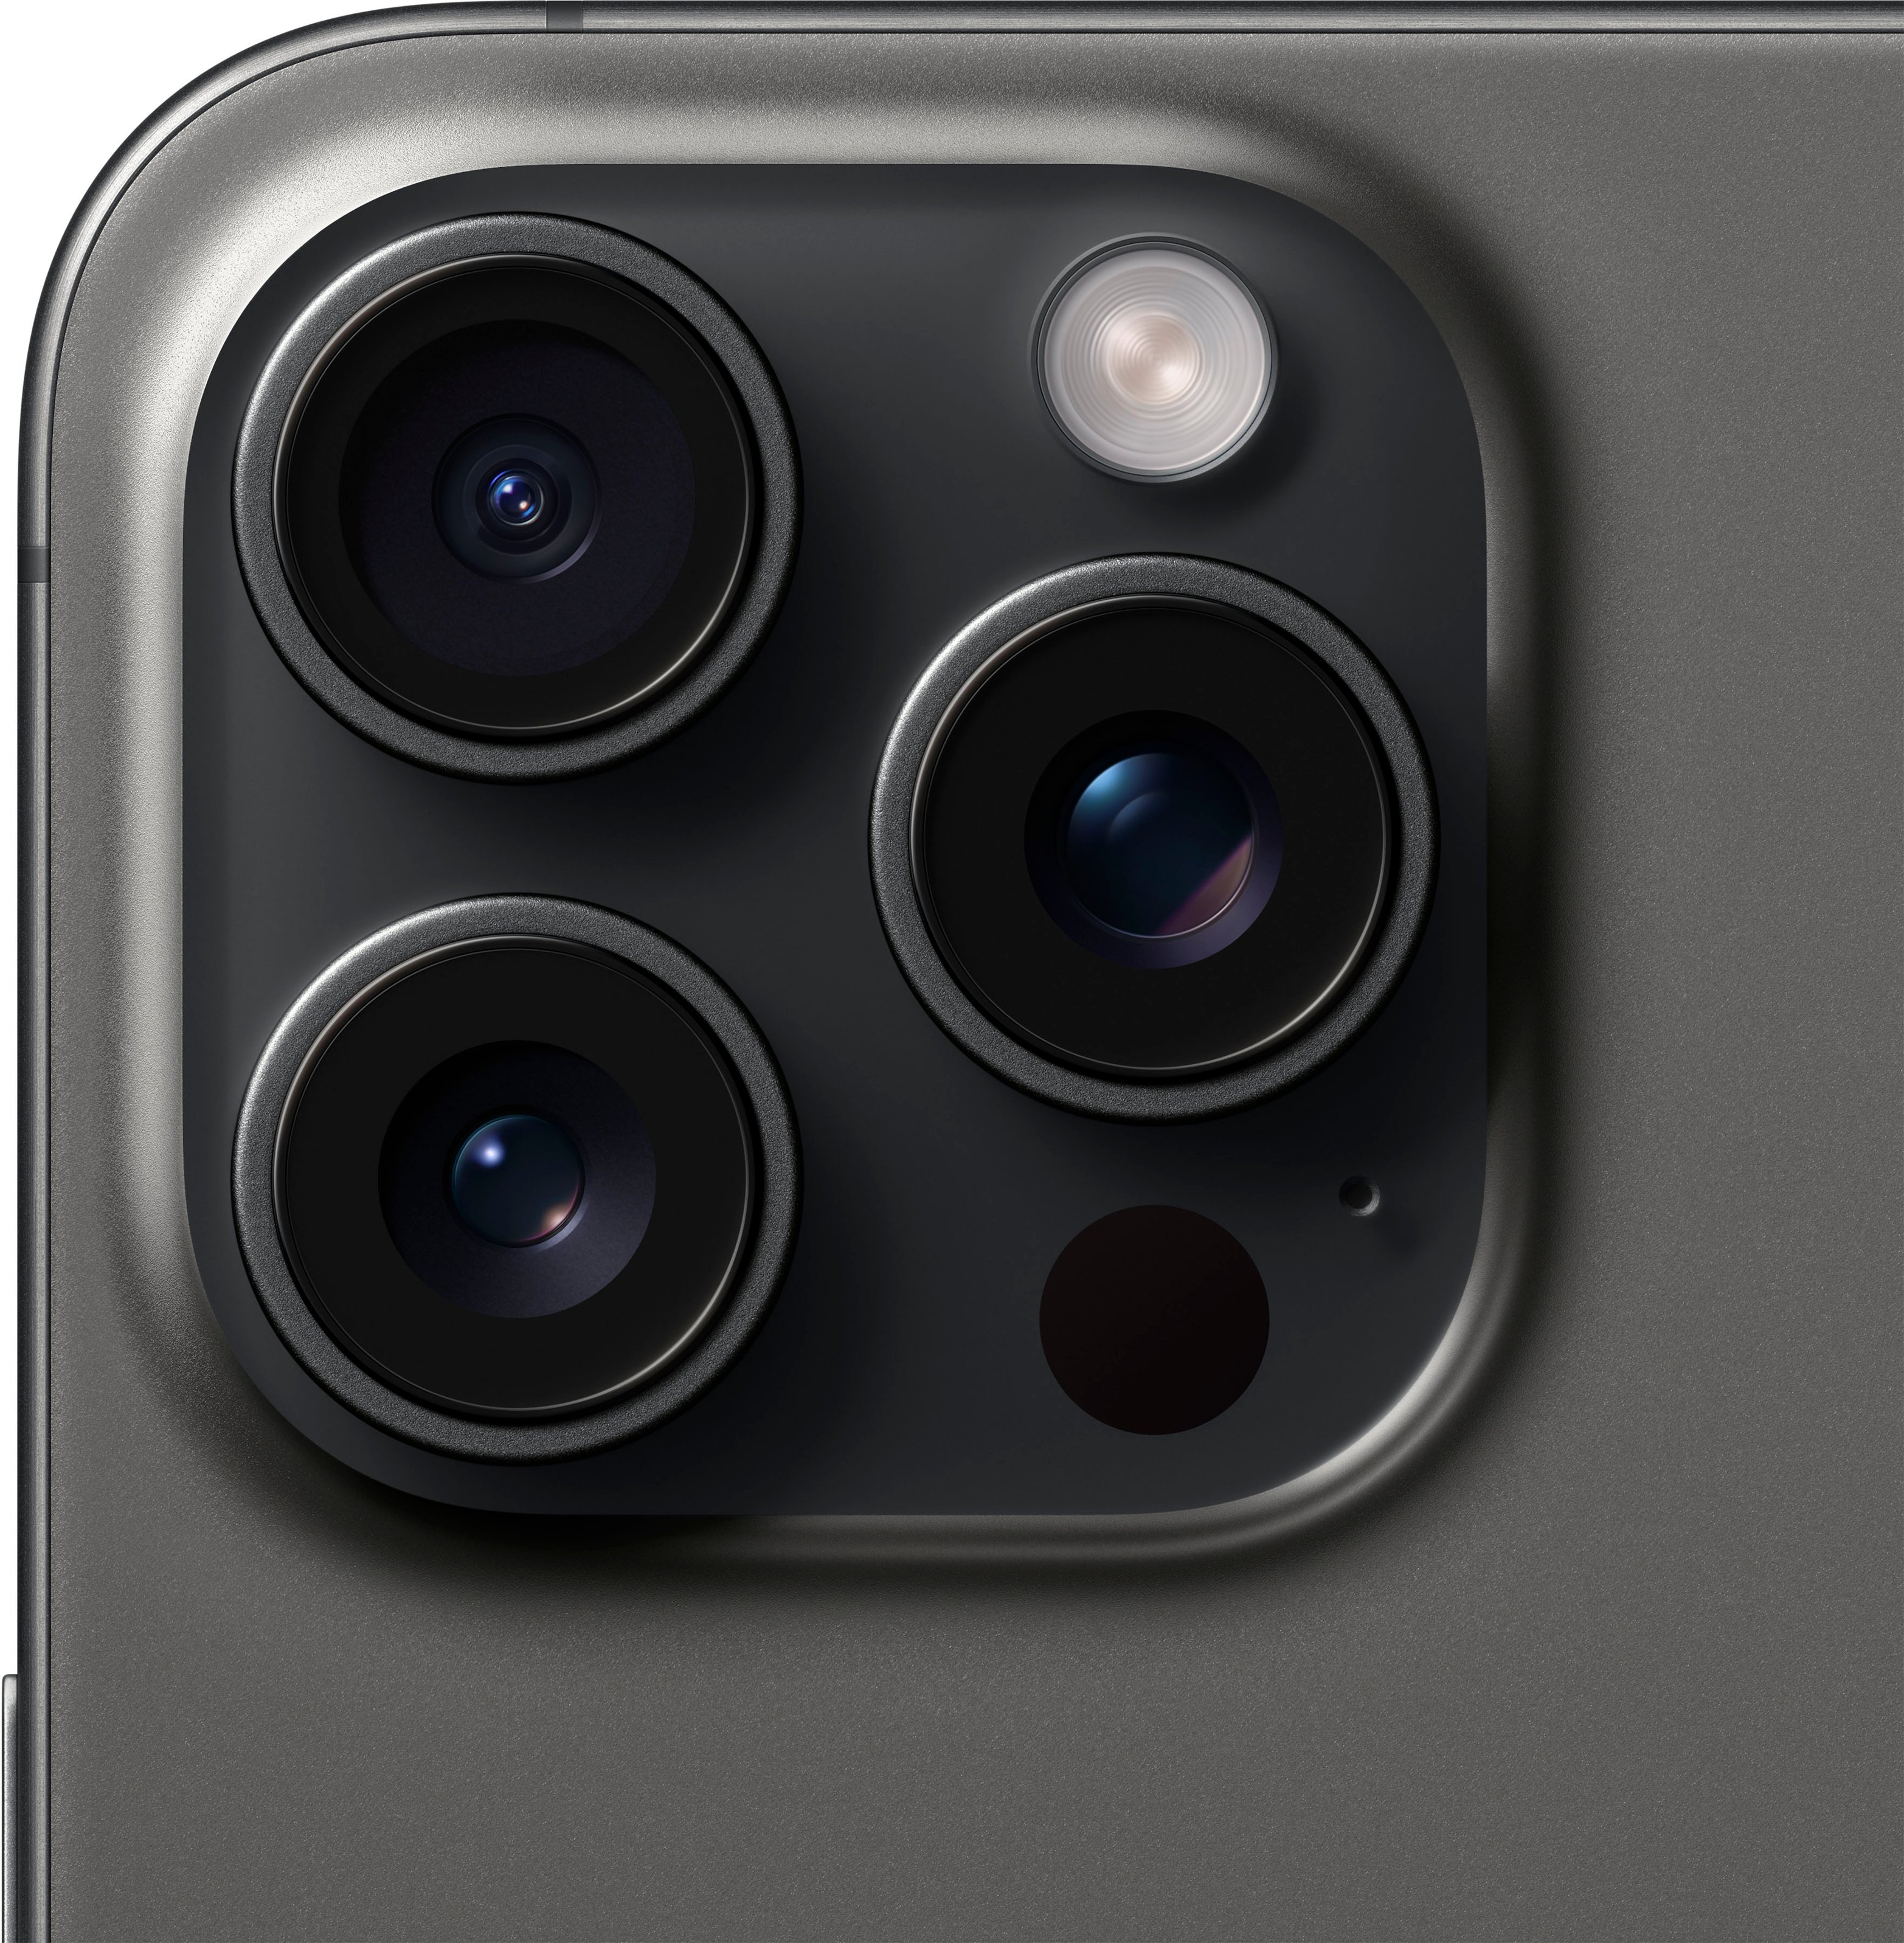 Apple iPhone 15 Pro Max 256GB Natural Titanium (Verizon) MU683LL/A